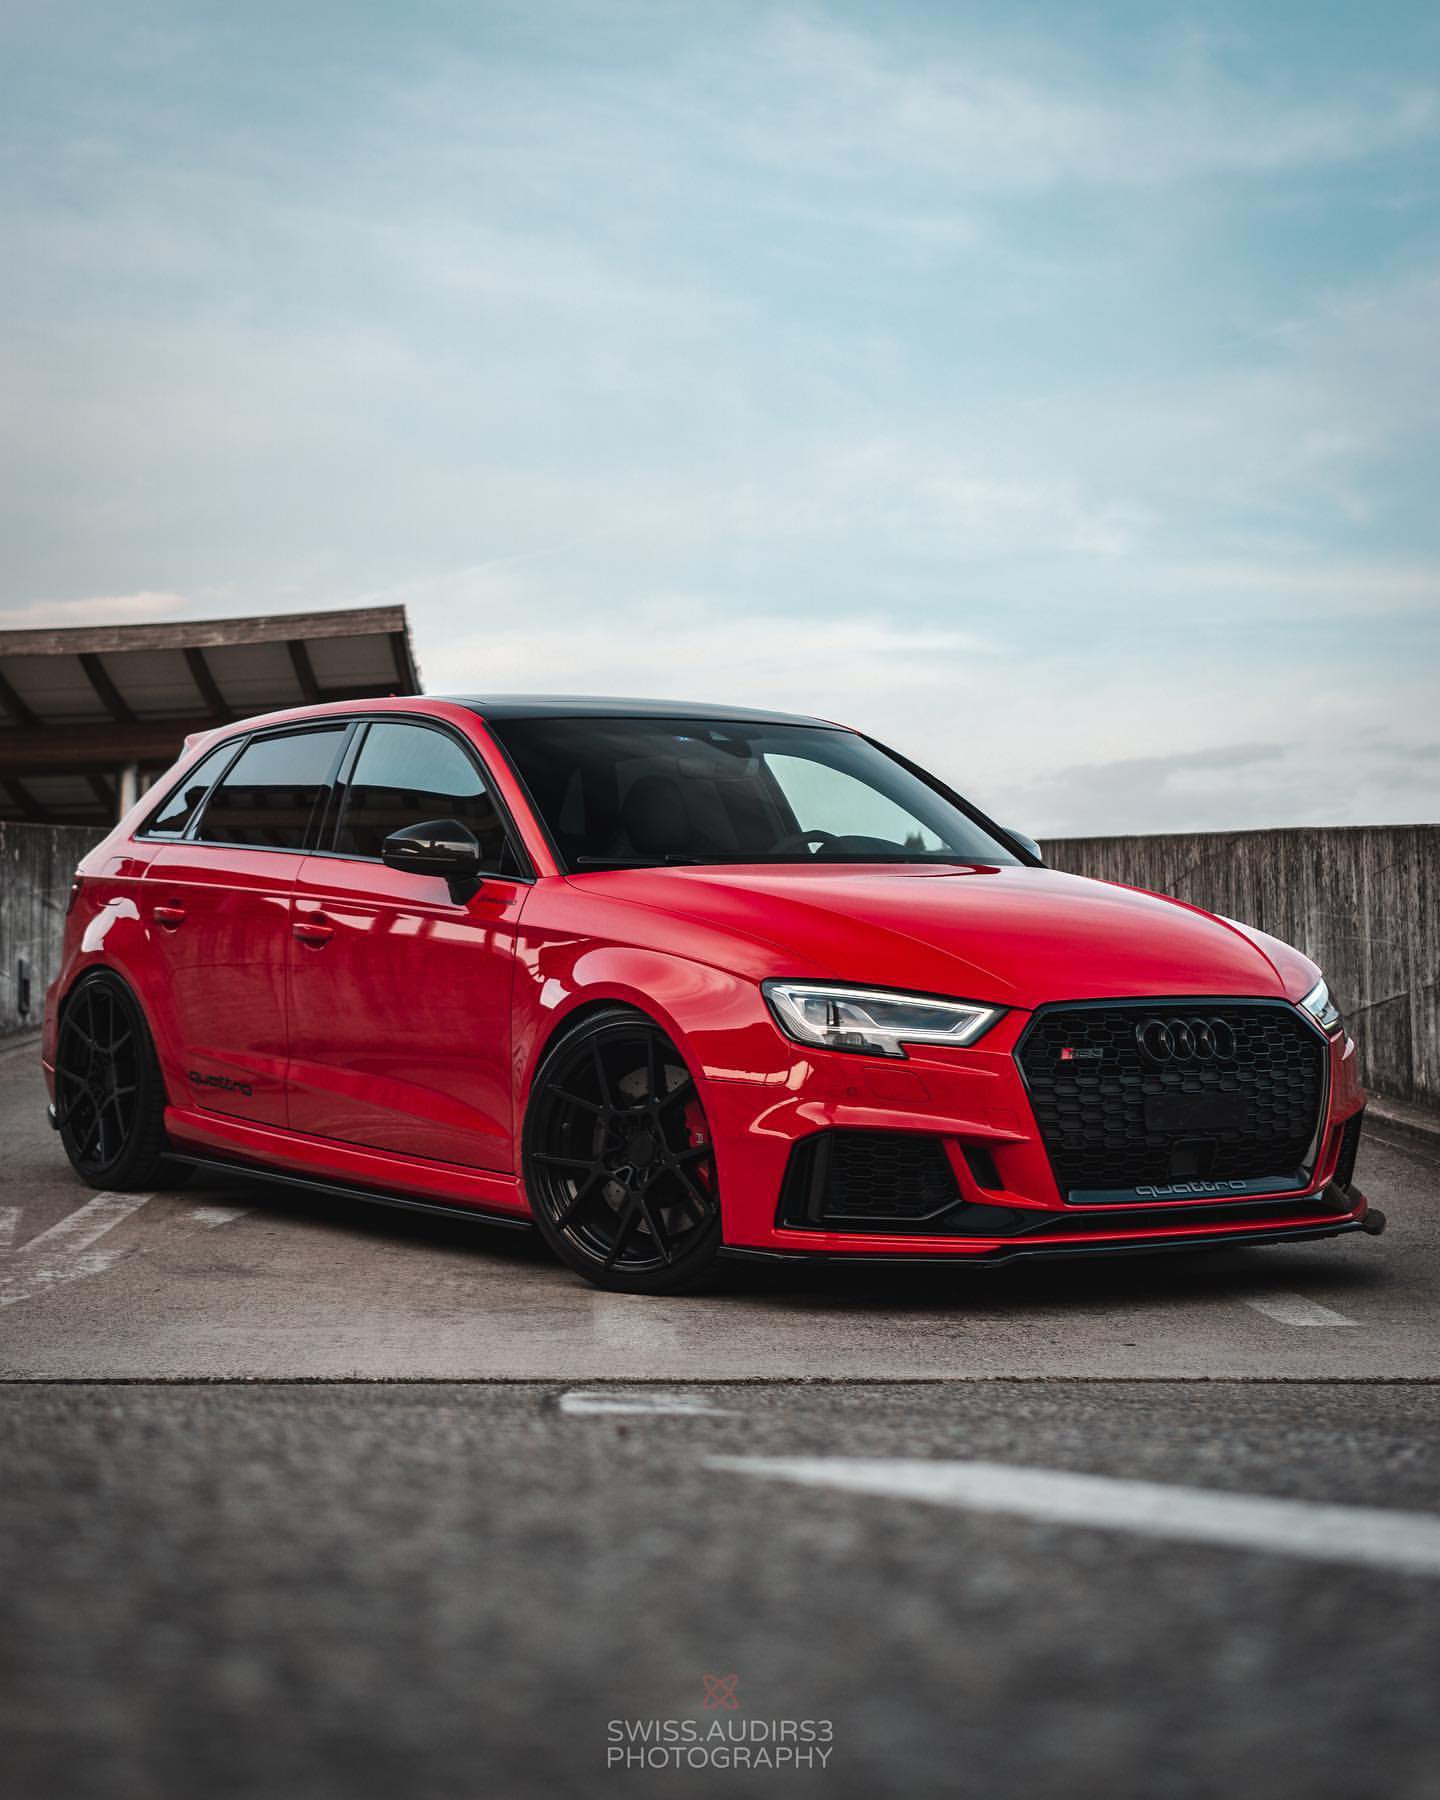 Audi RS3 https://t.co/JxukS5o302